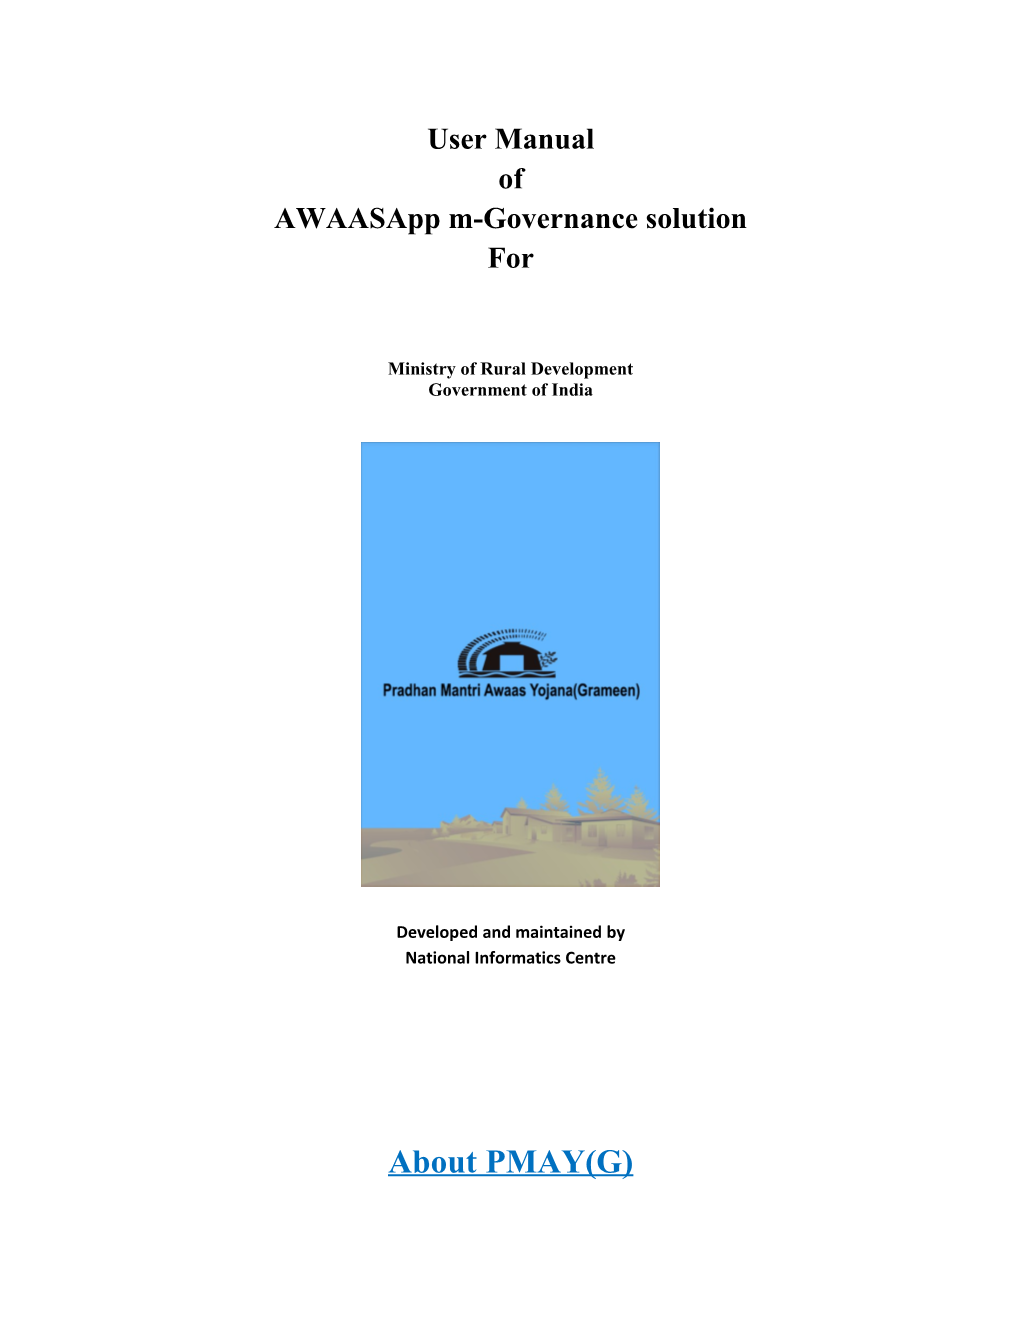 Awaasappm-Governance Solution